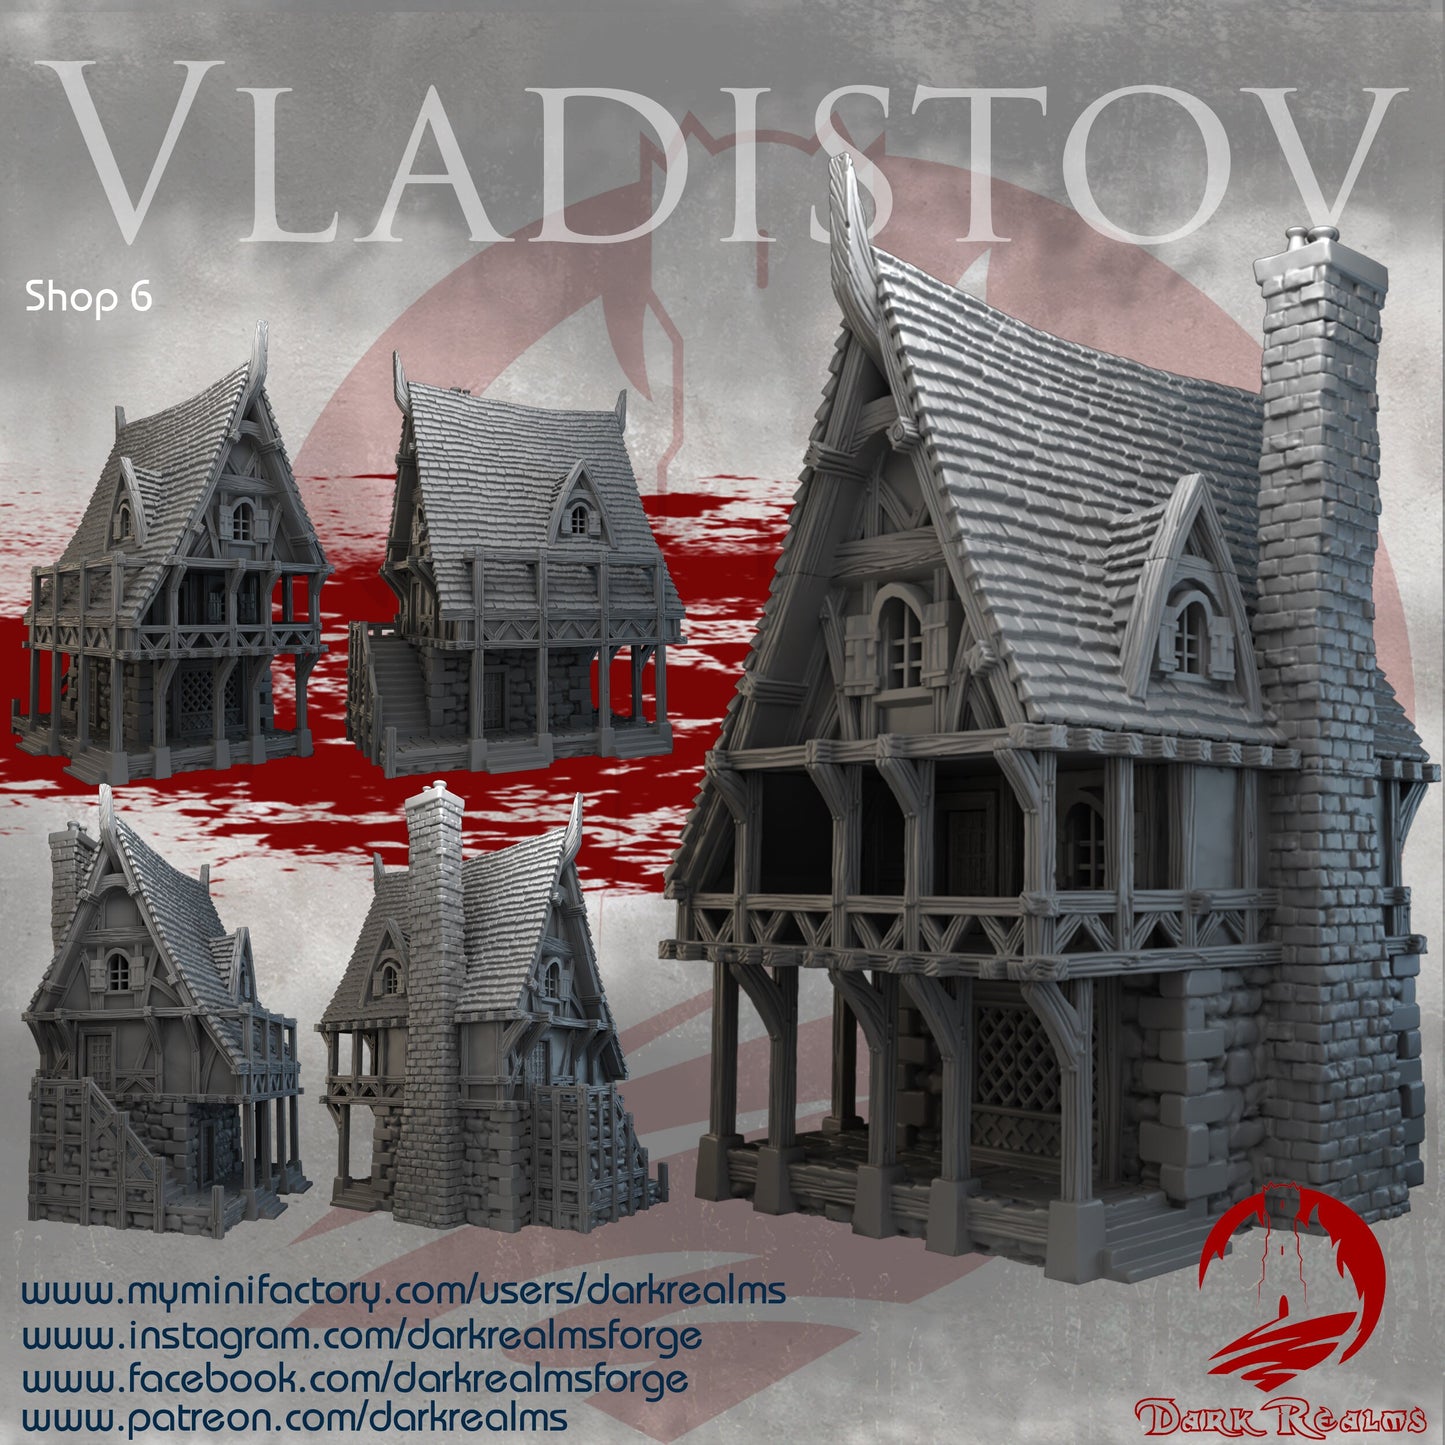 Vladistov, Shop 6, Vampire Town, DND Terrain. Strahd